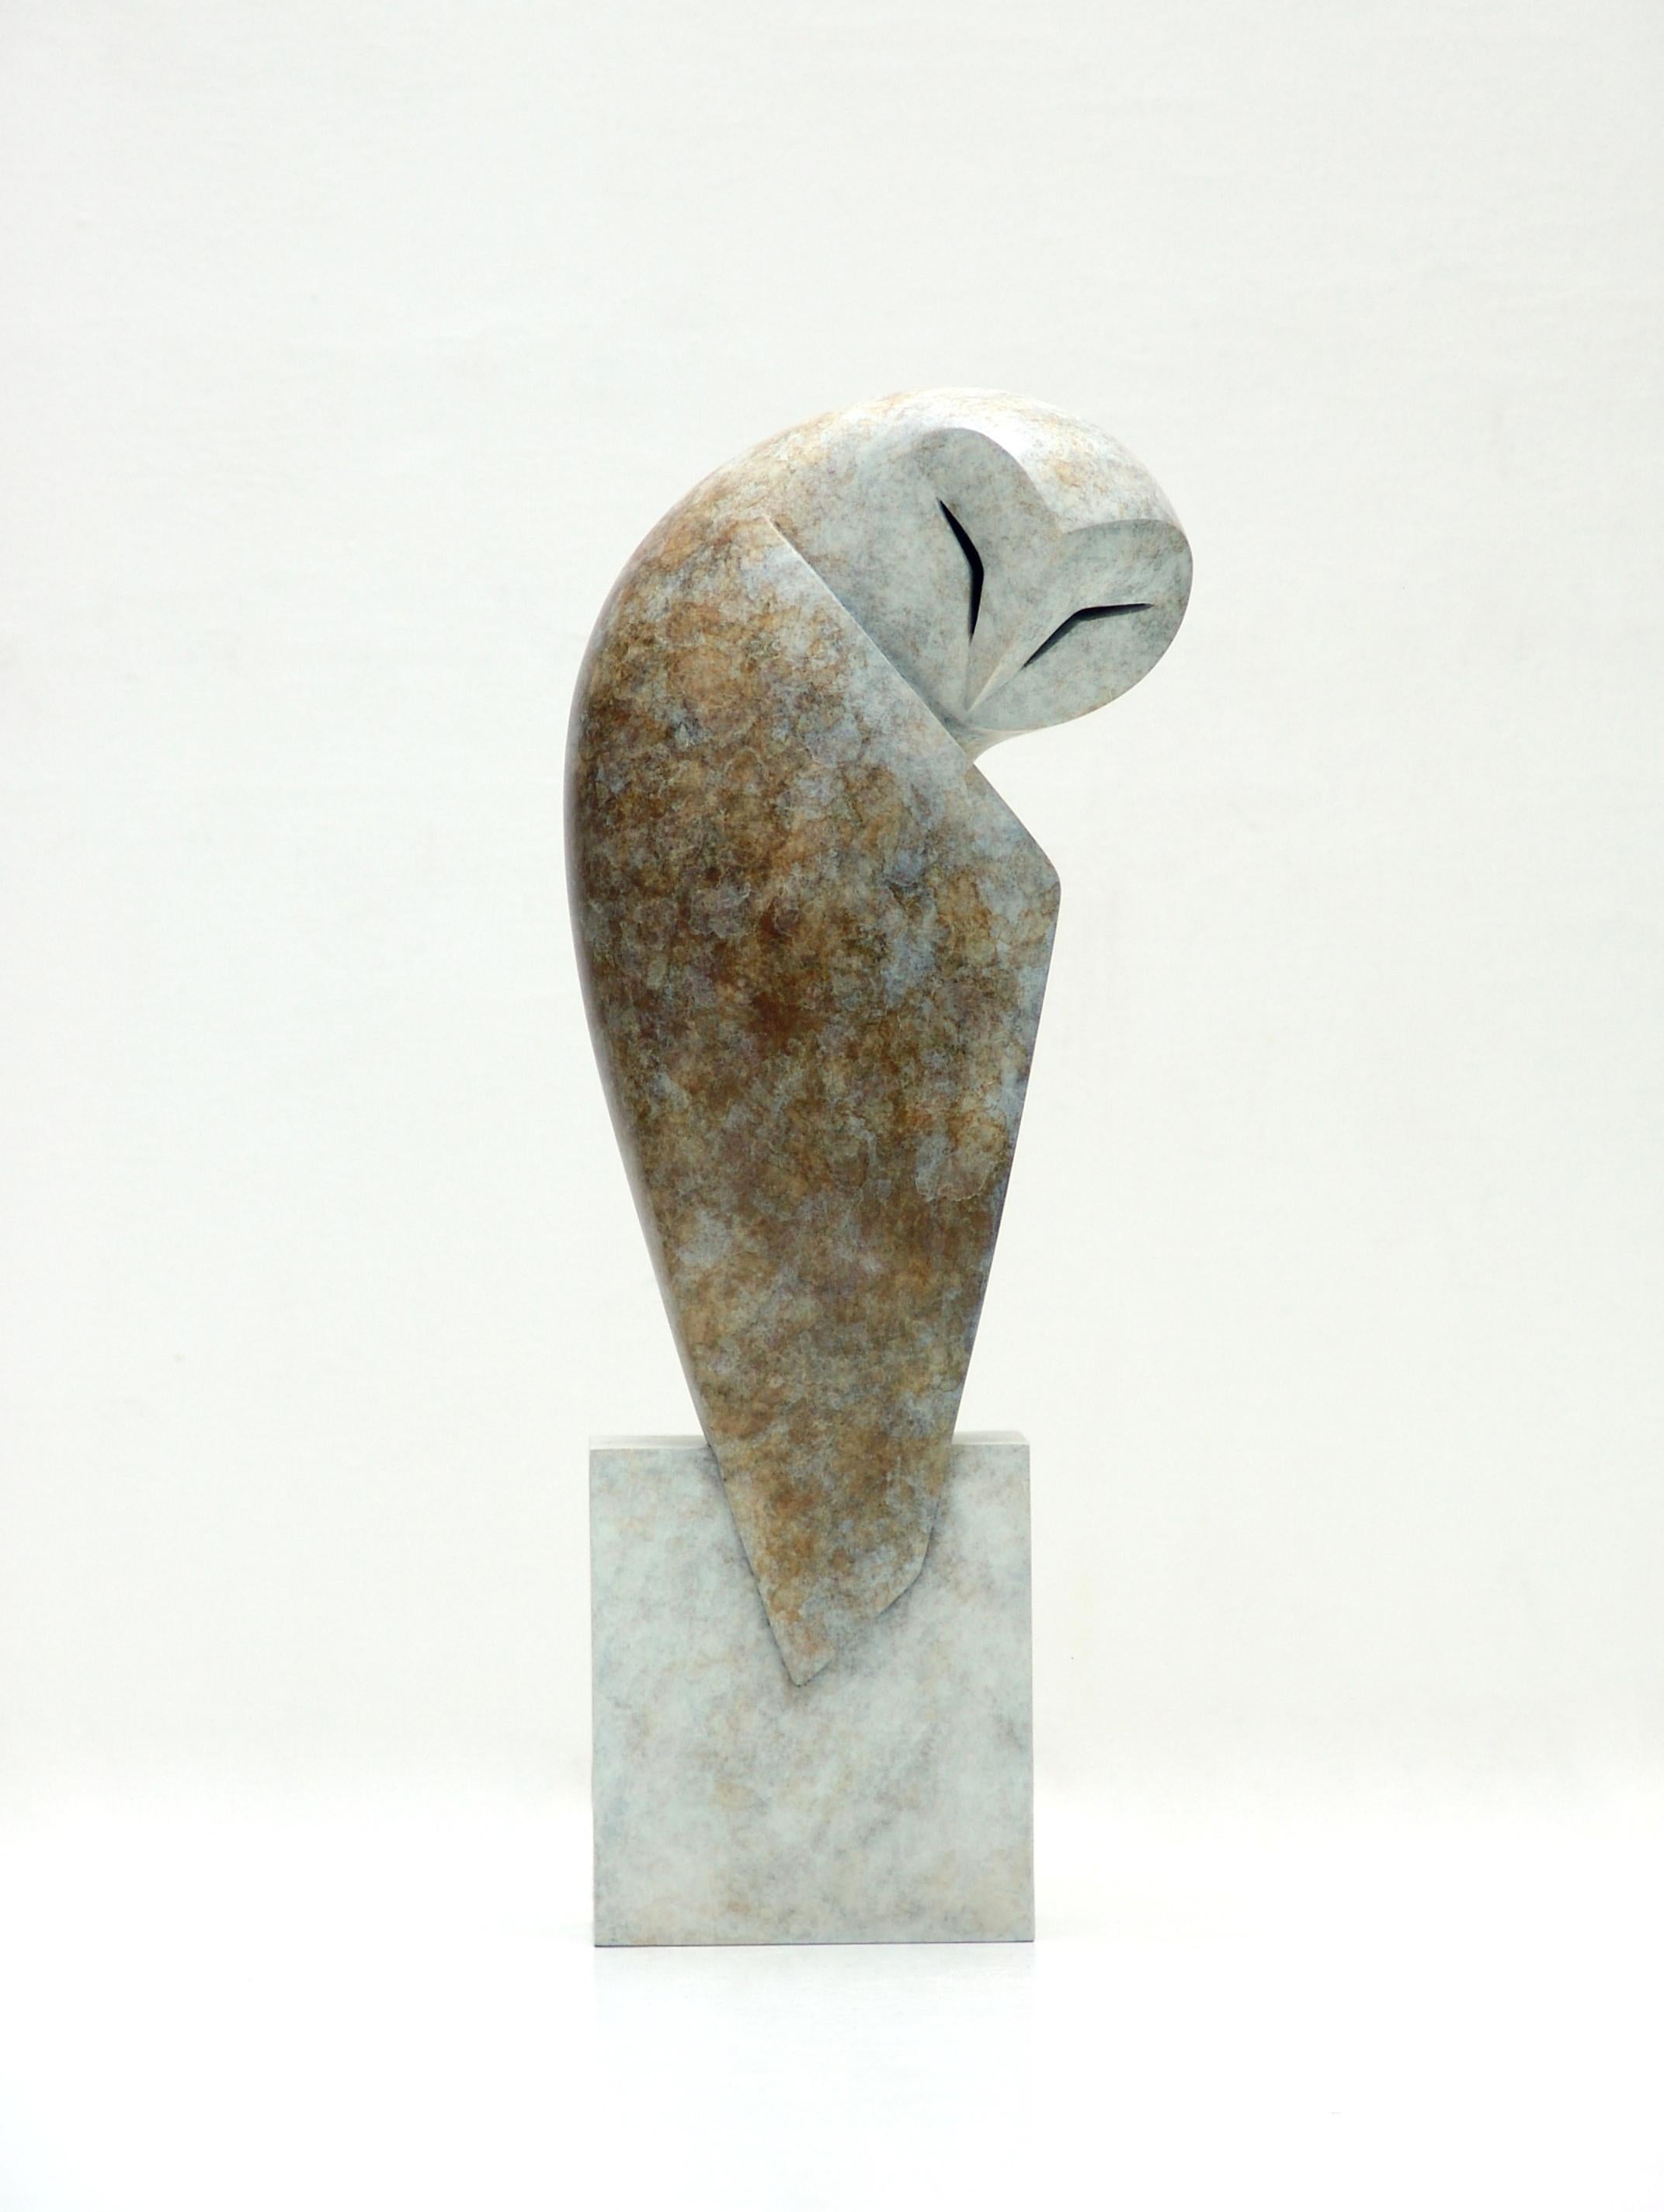 Anthony Theakston Figurative Sculpture - "Bastion" Contemporary Bronze Sculpture Portrait of an Owl